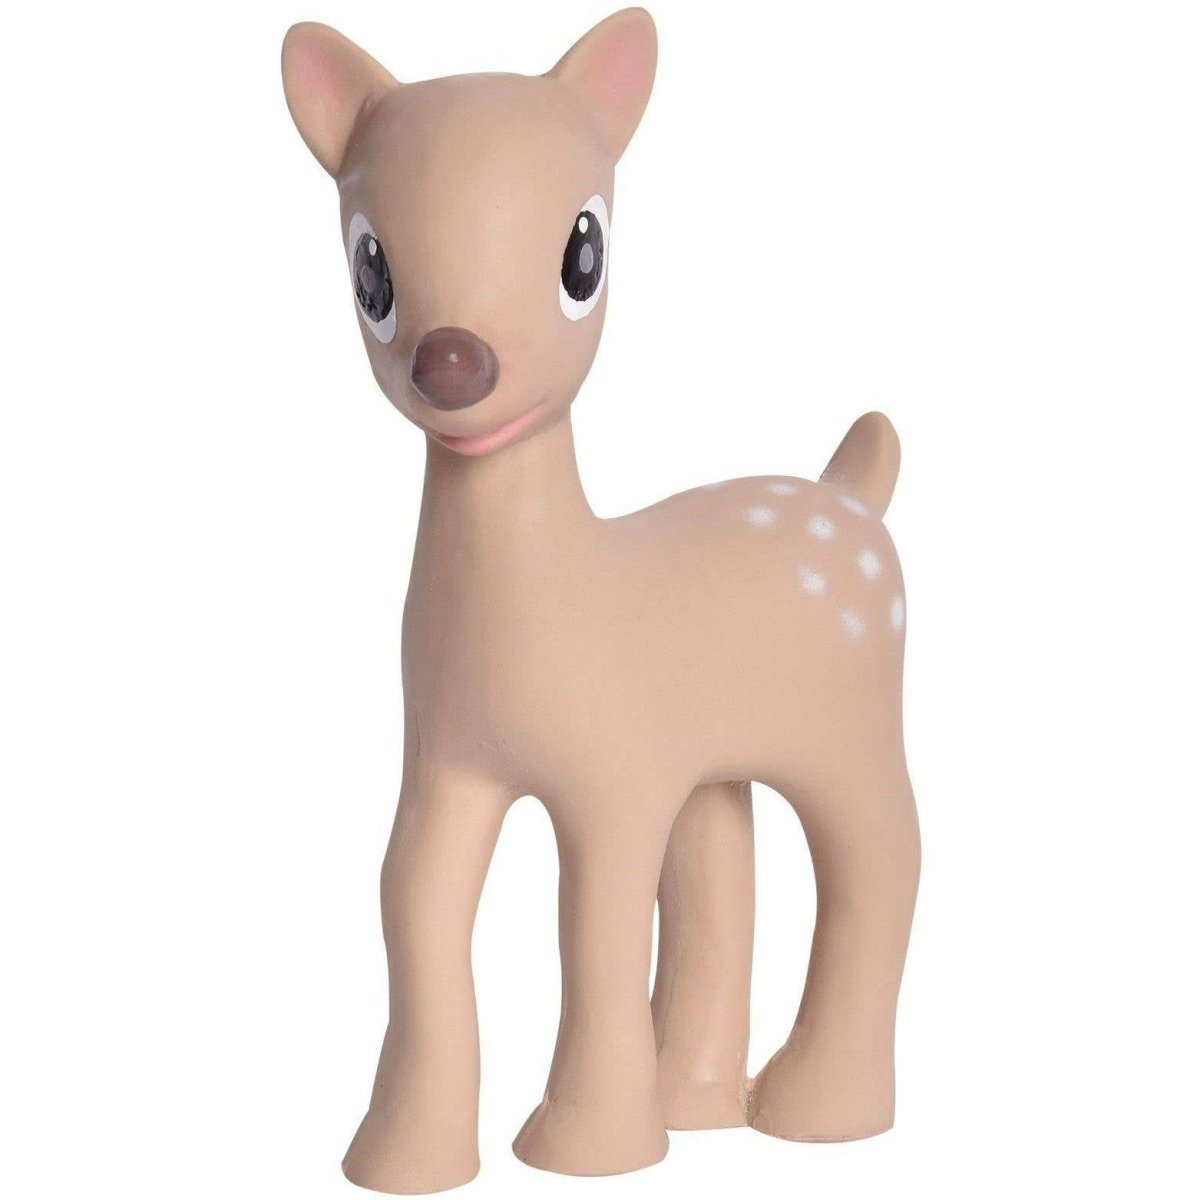 Organic Rubber Rattle, Teether & Bath Toy - Ralphie Reindeer | Tikiri Toys LLC | Baby Essentials - Bee Like Kids